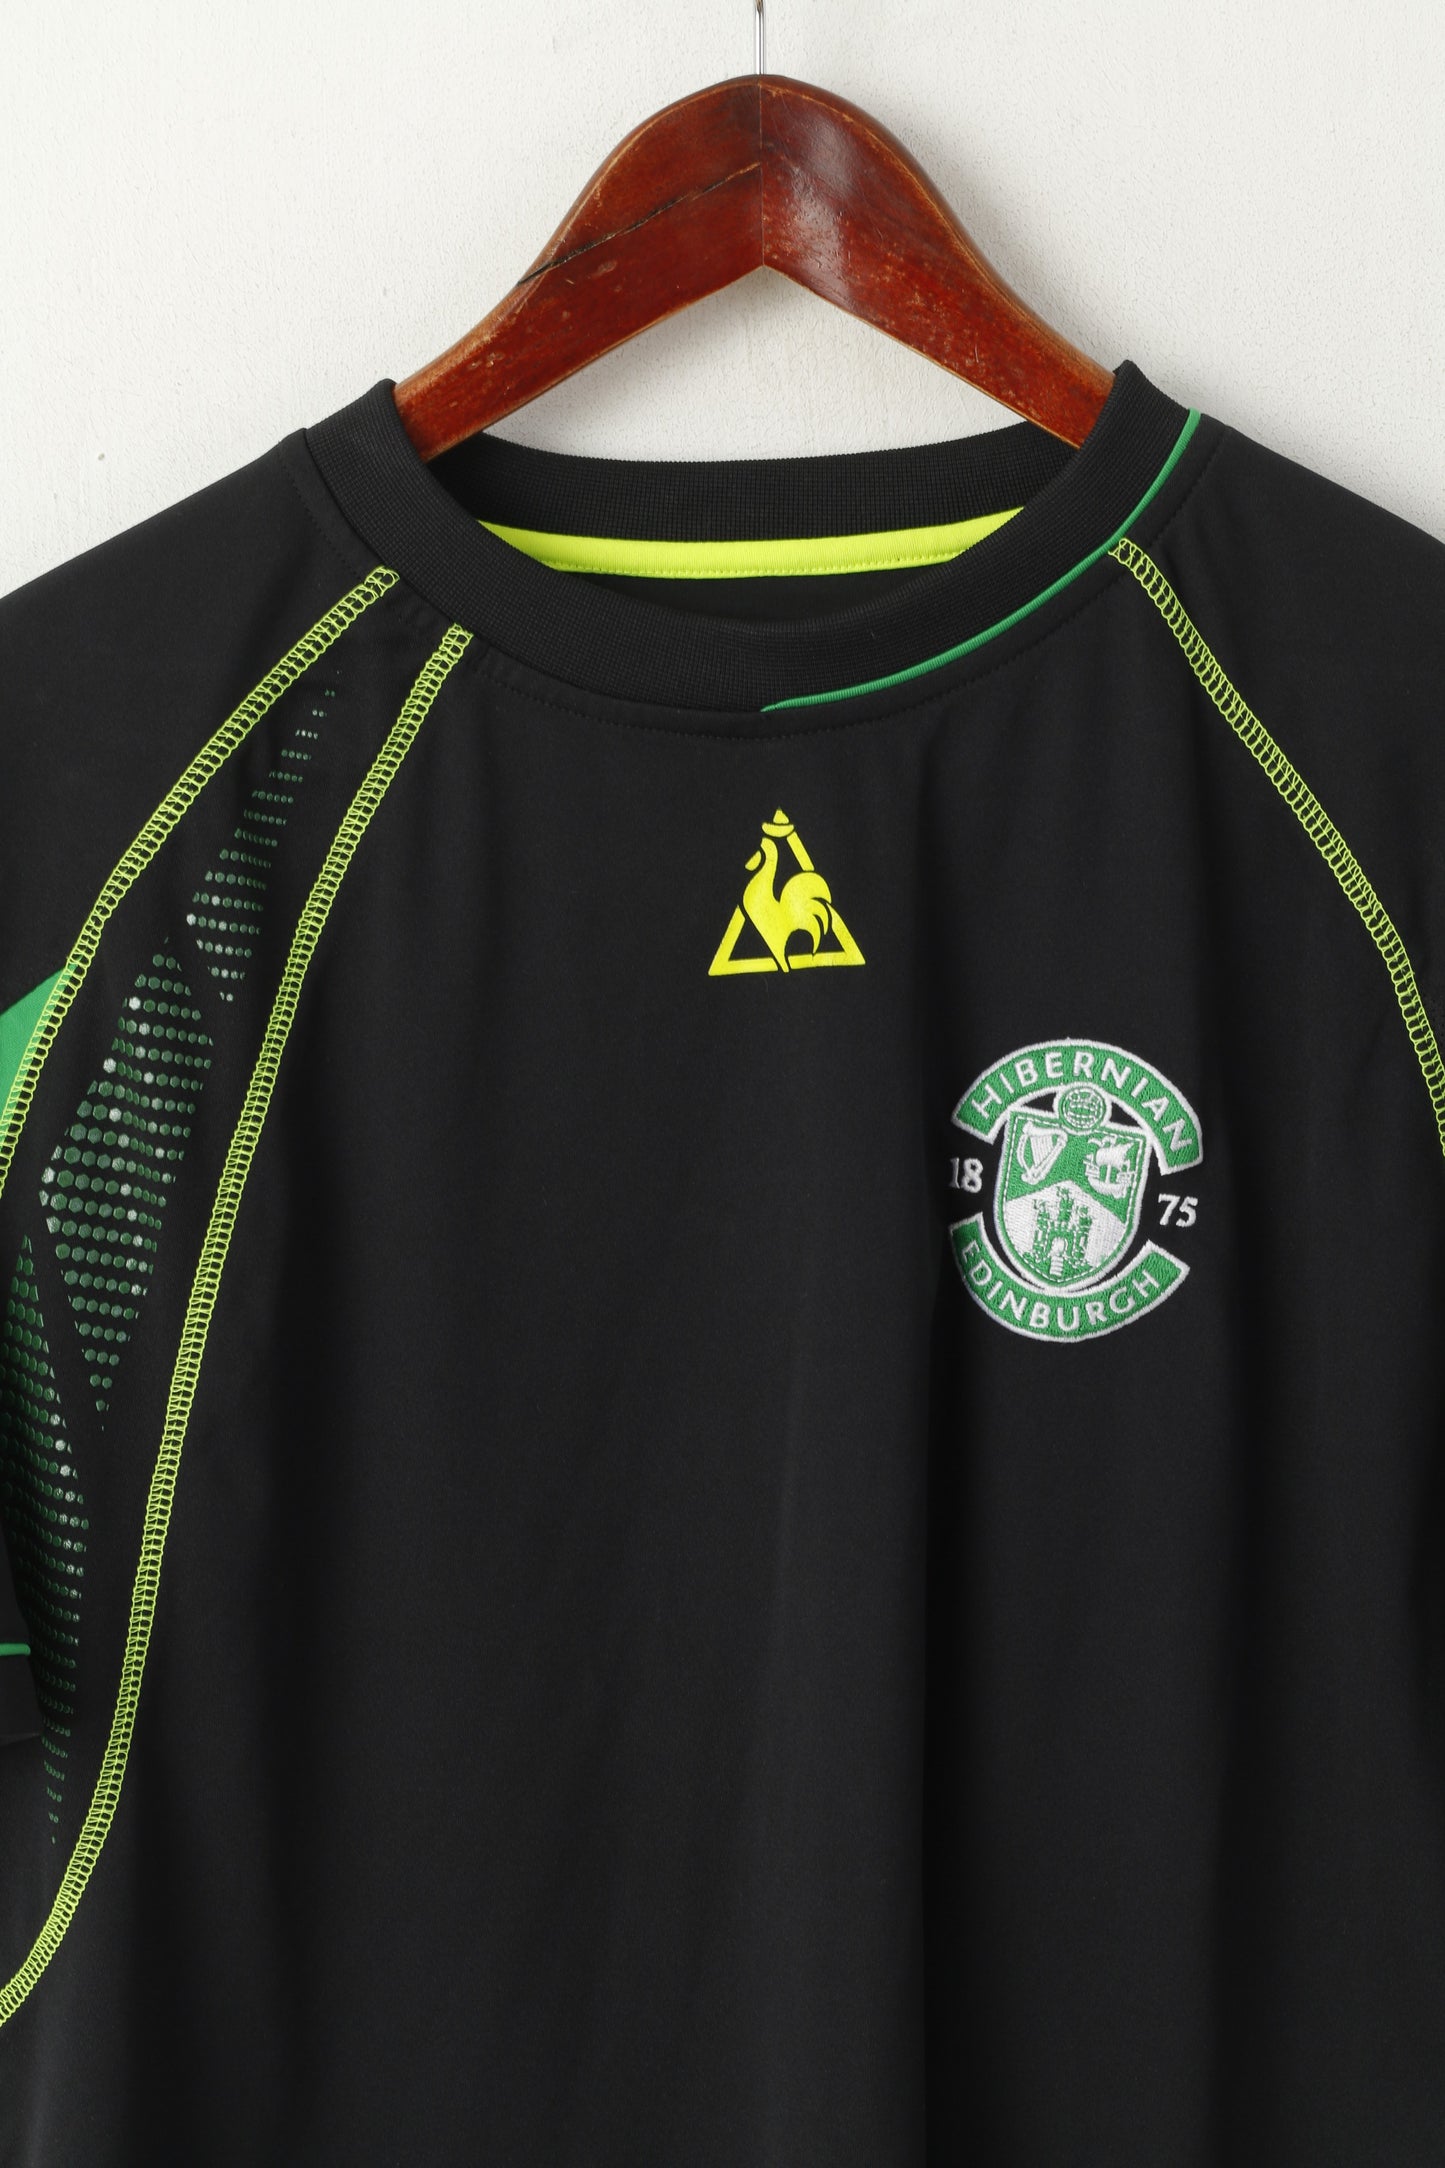 Le coq Sportif Men M Shirt Black Hibernian Edinburgh Football Club Jersey Sport Top